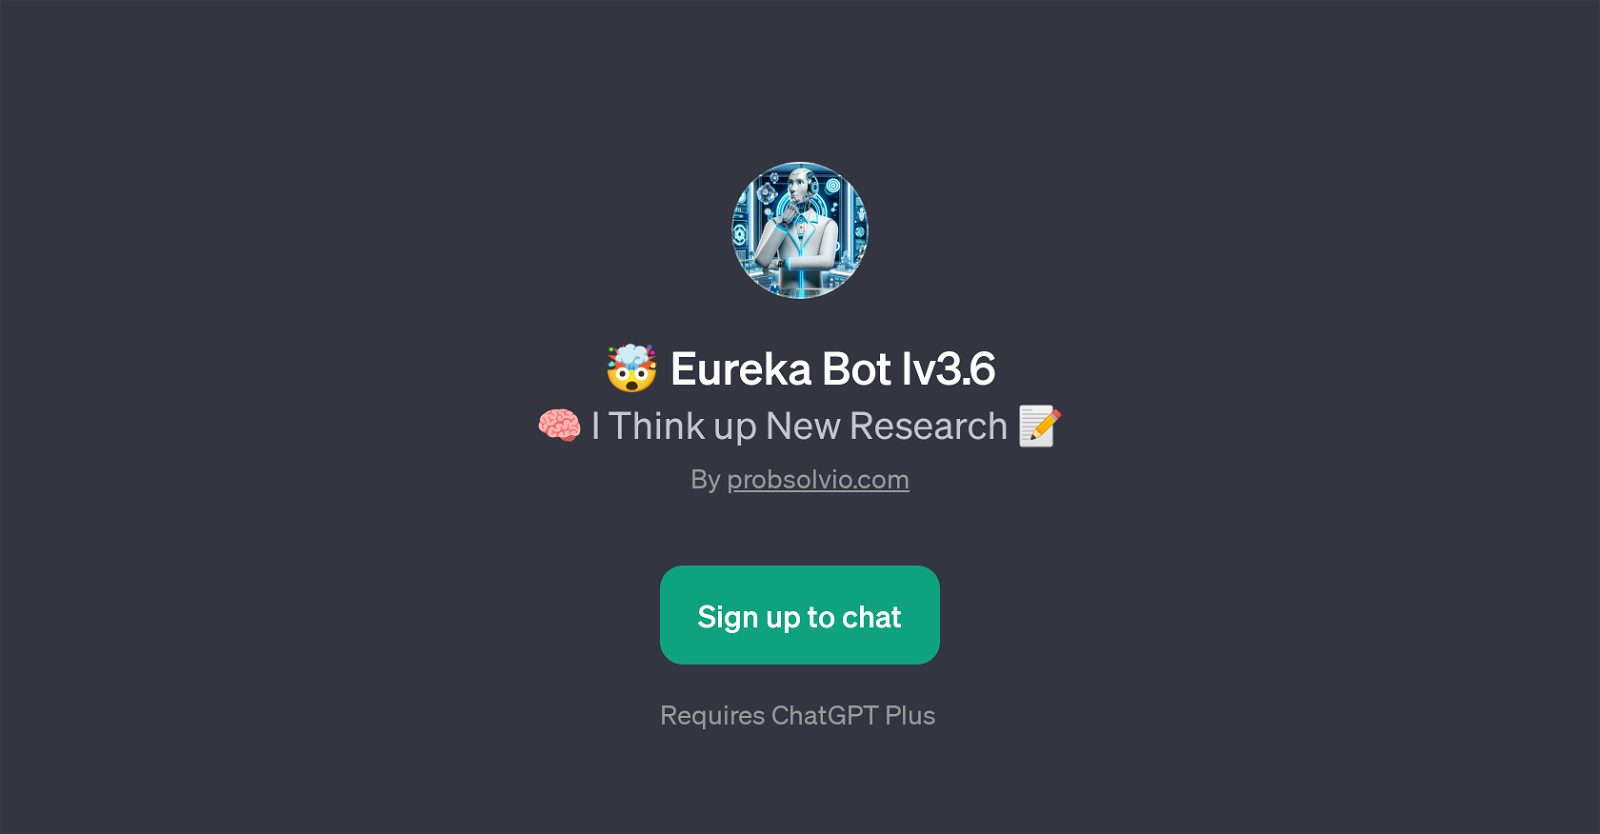 Eureka Bot lv3.6 website